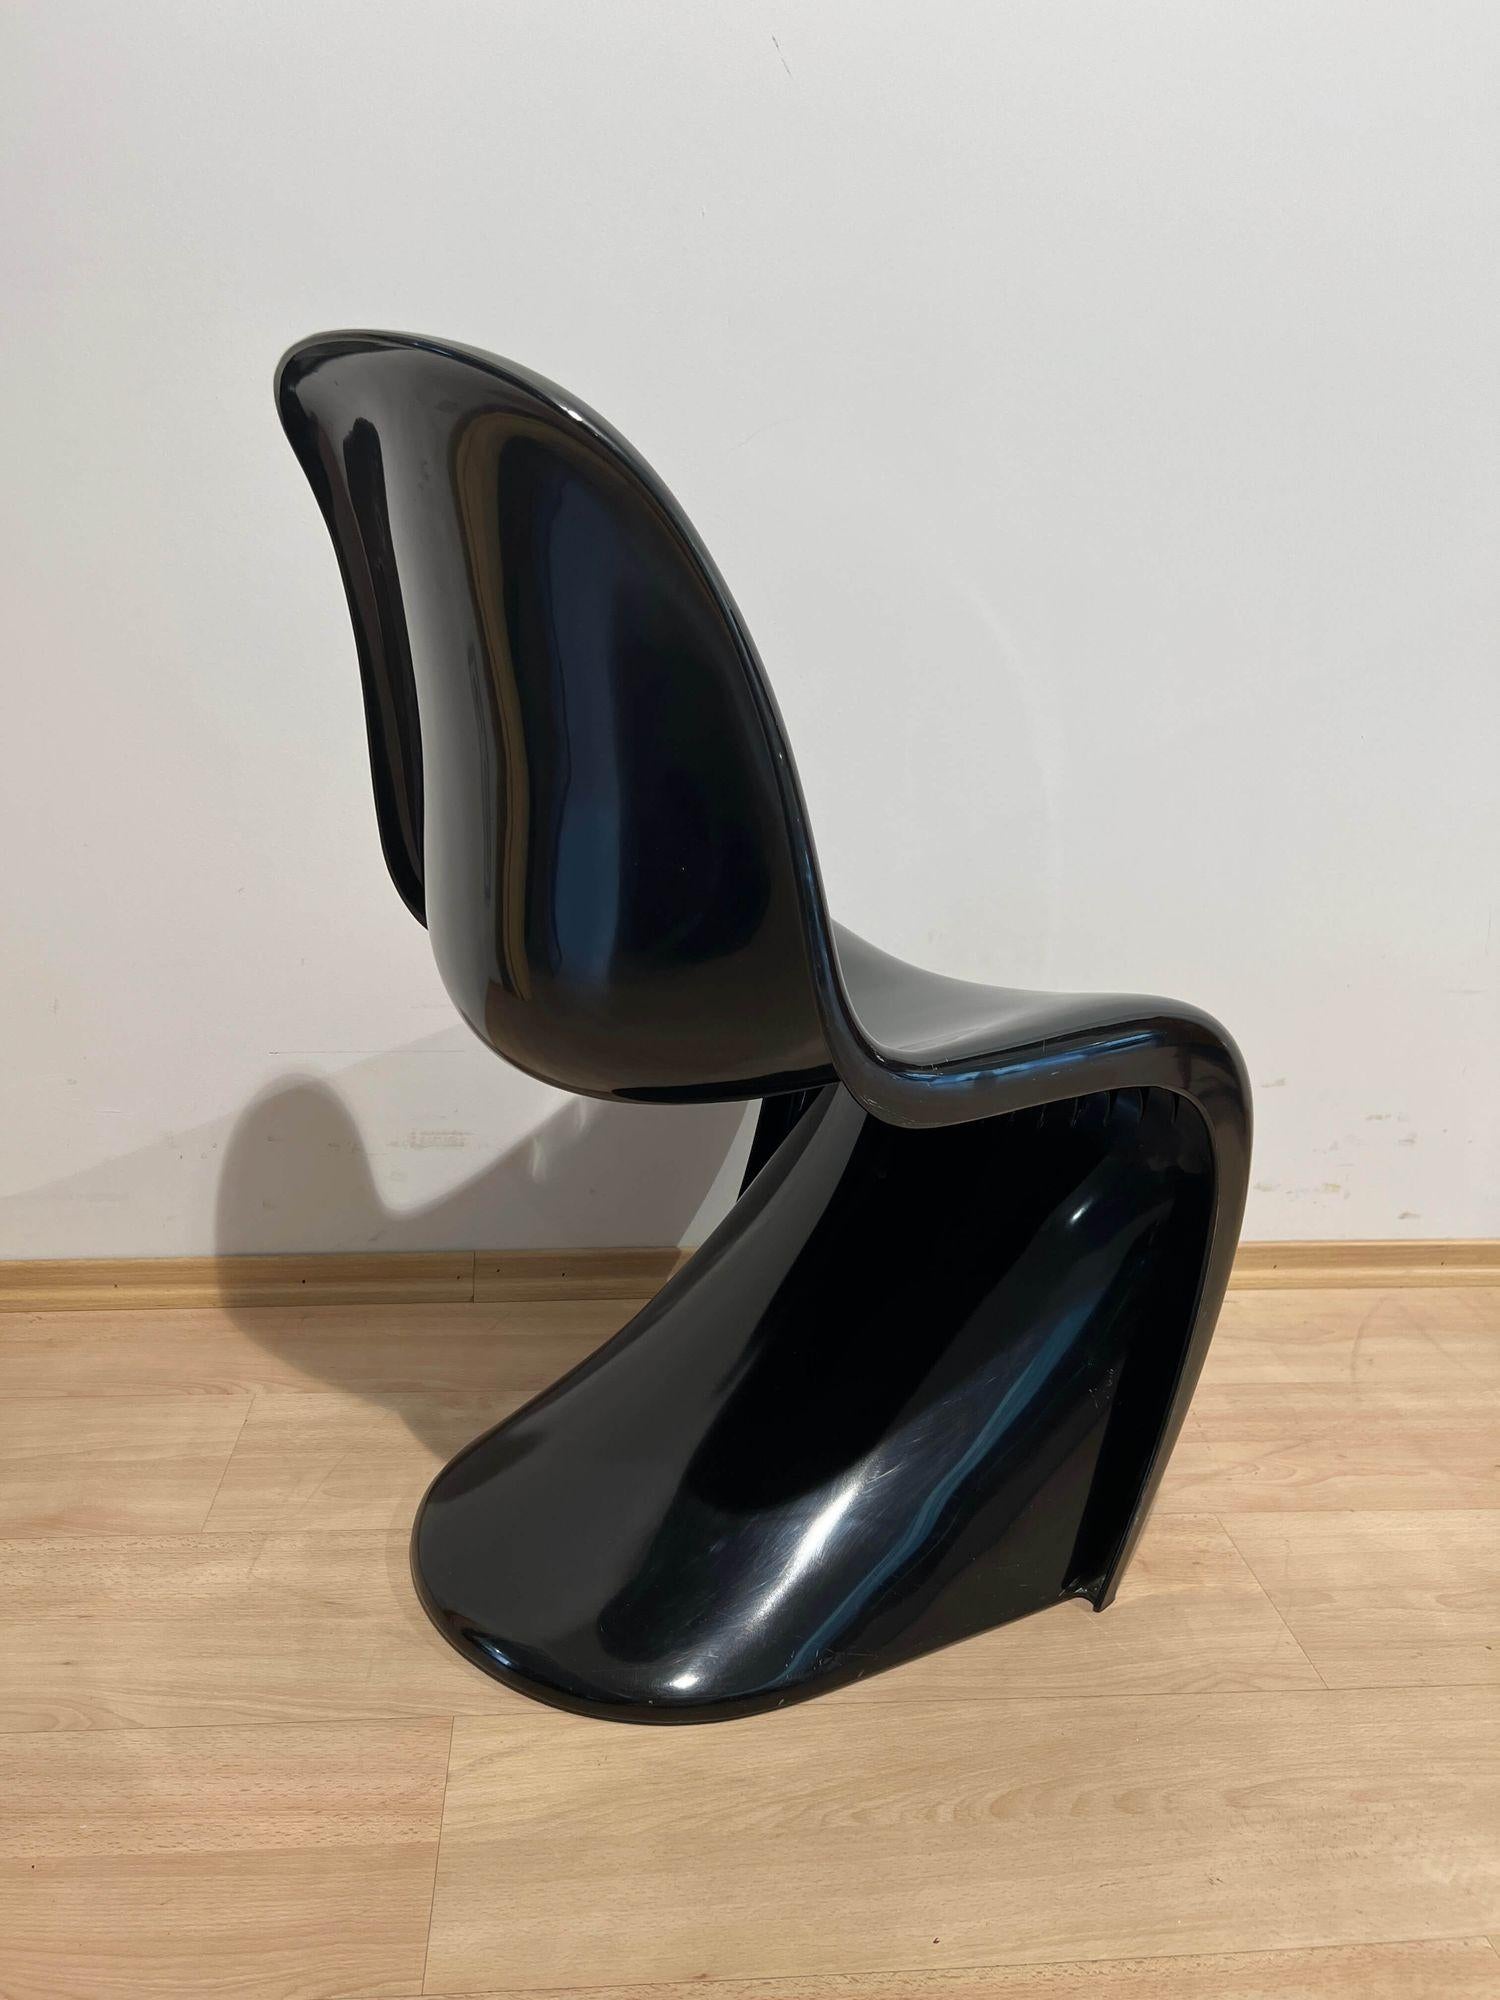 Verner Panton ‚Panton’ Cantilever Chair in Black Pu, Germany, 1971 For Sale 4